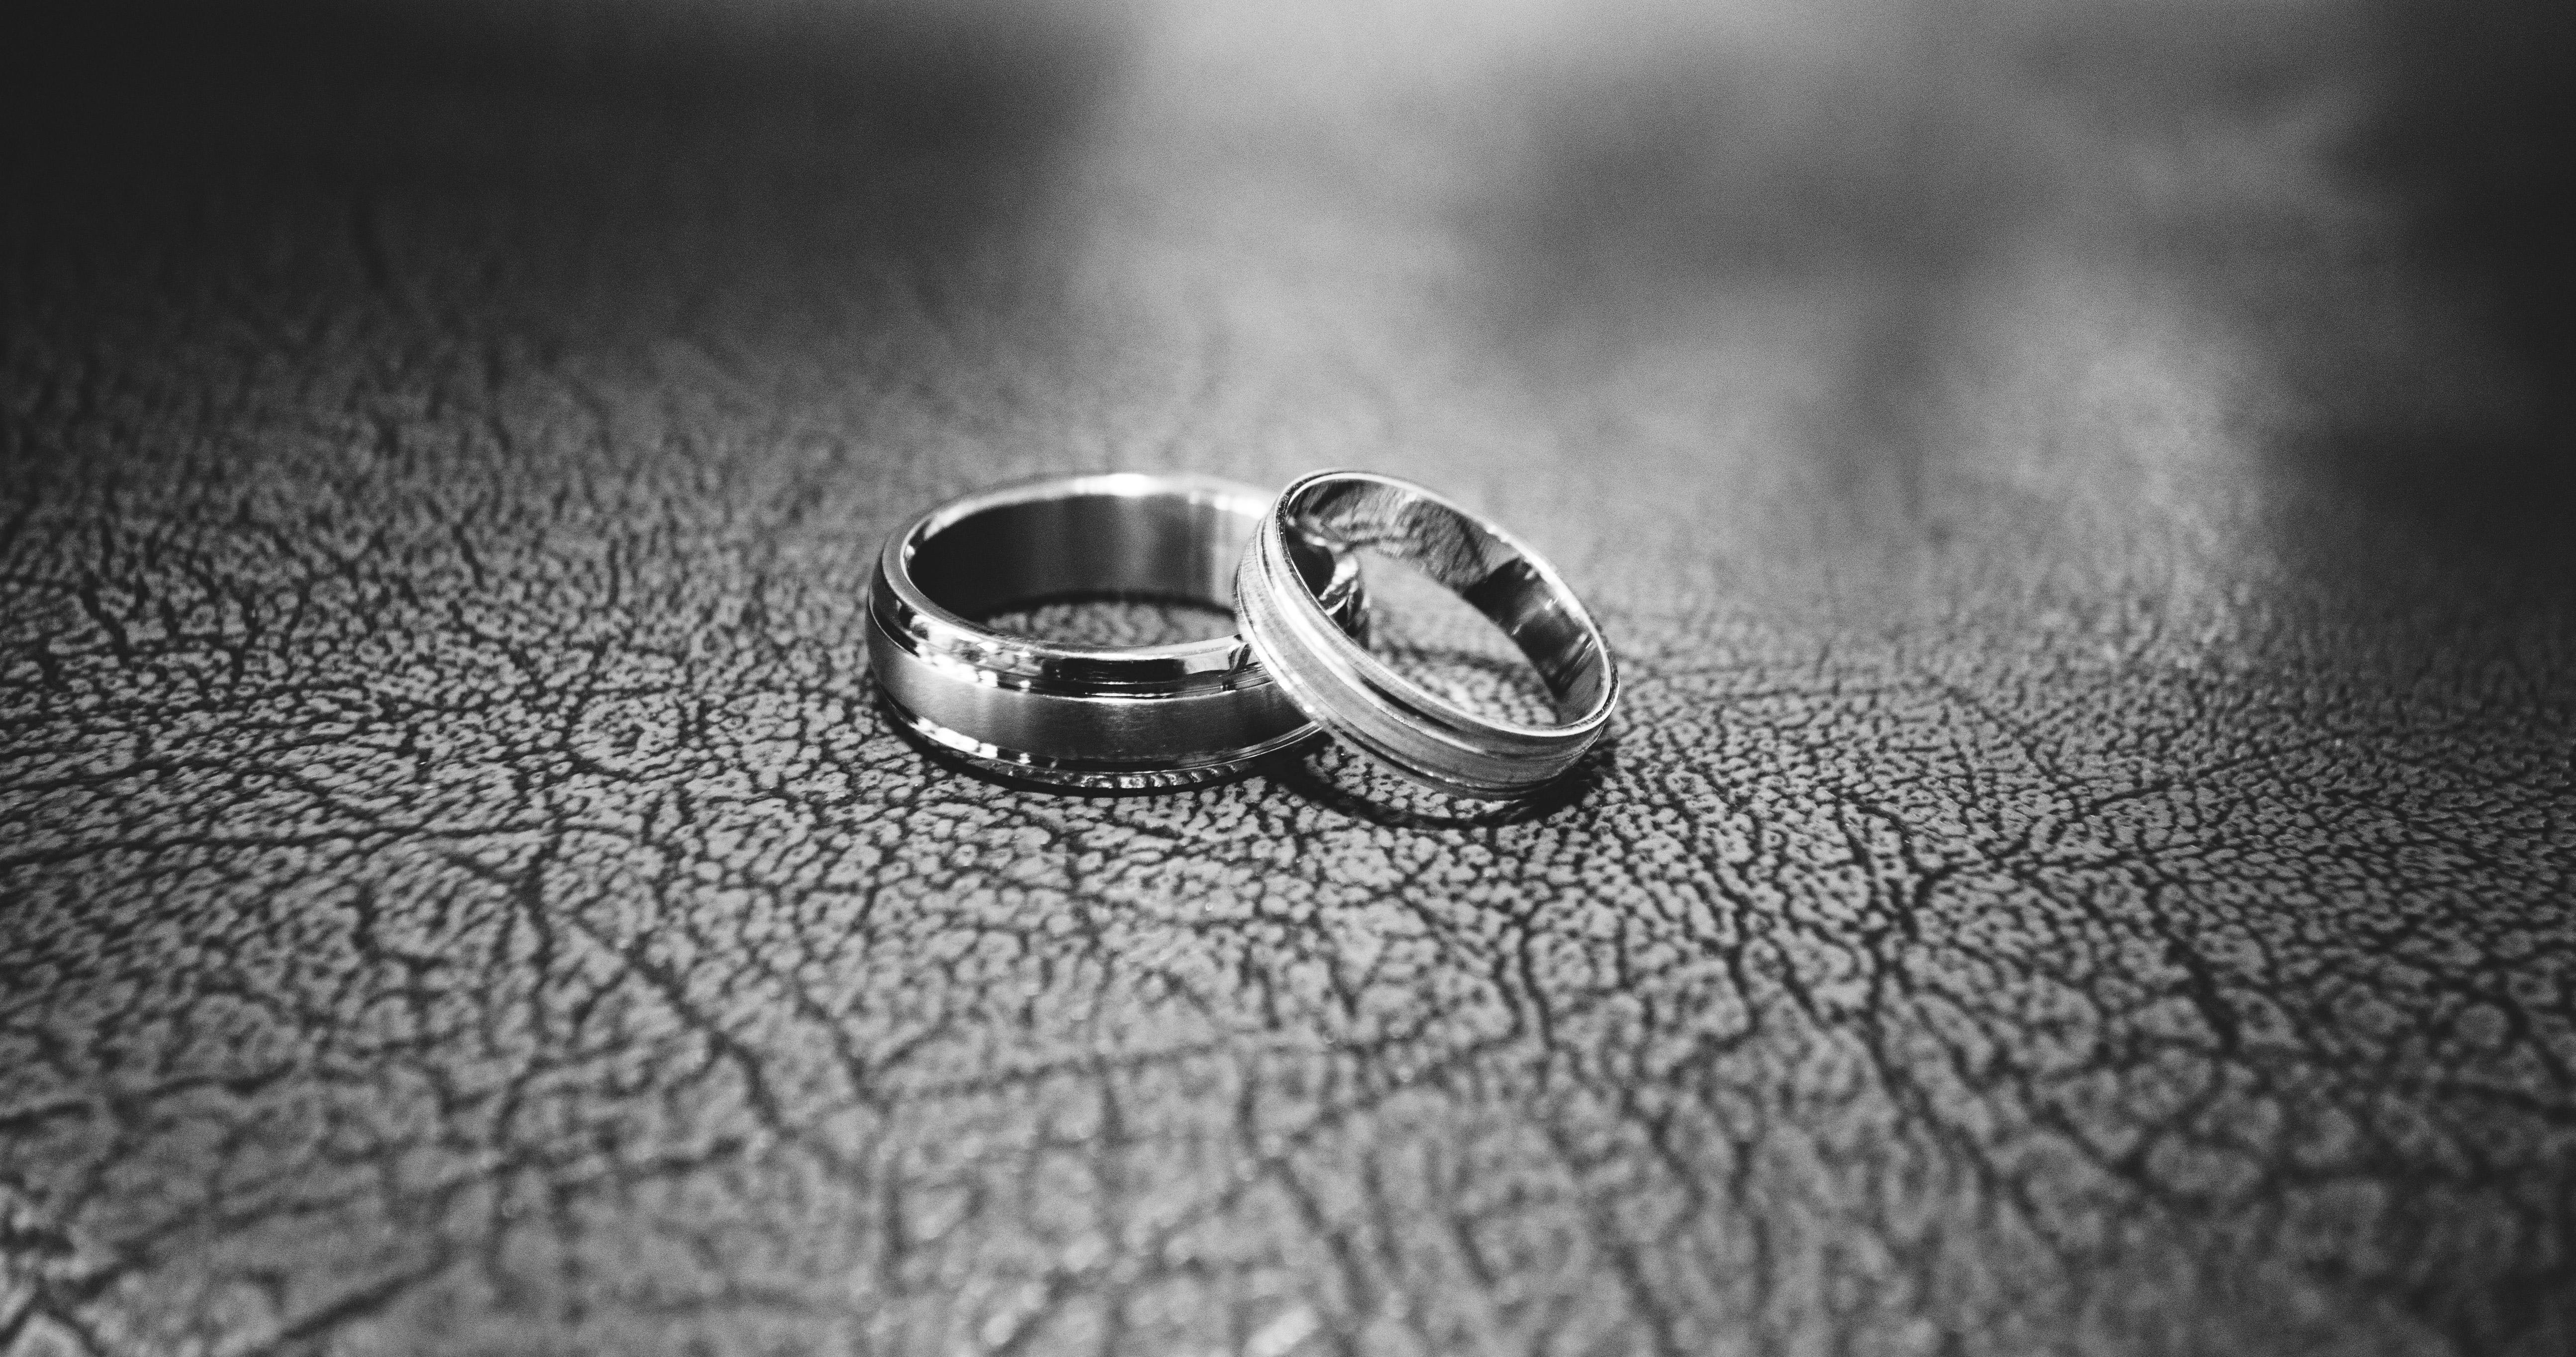 Michigan marriage laws leave children vulnurable